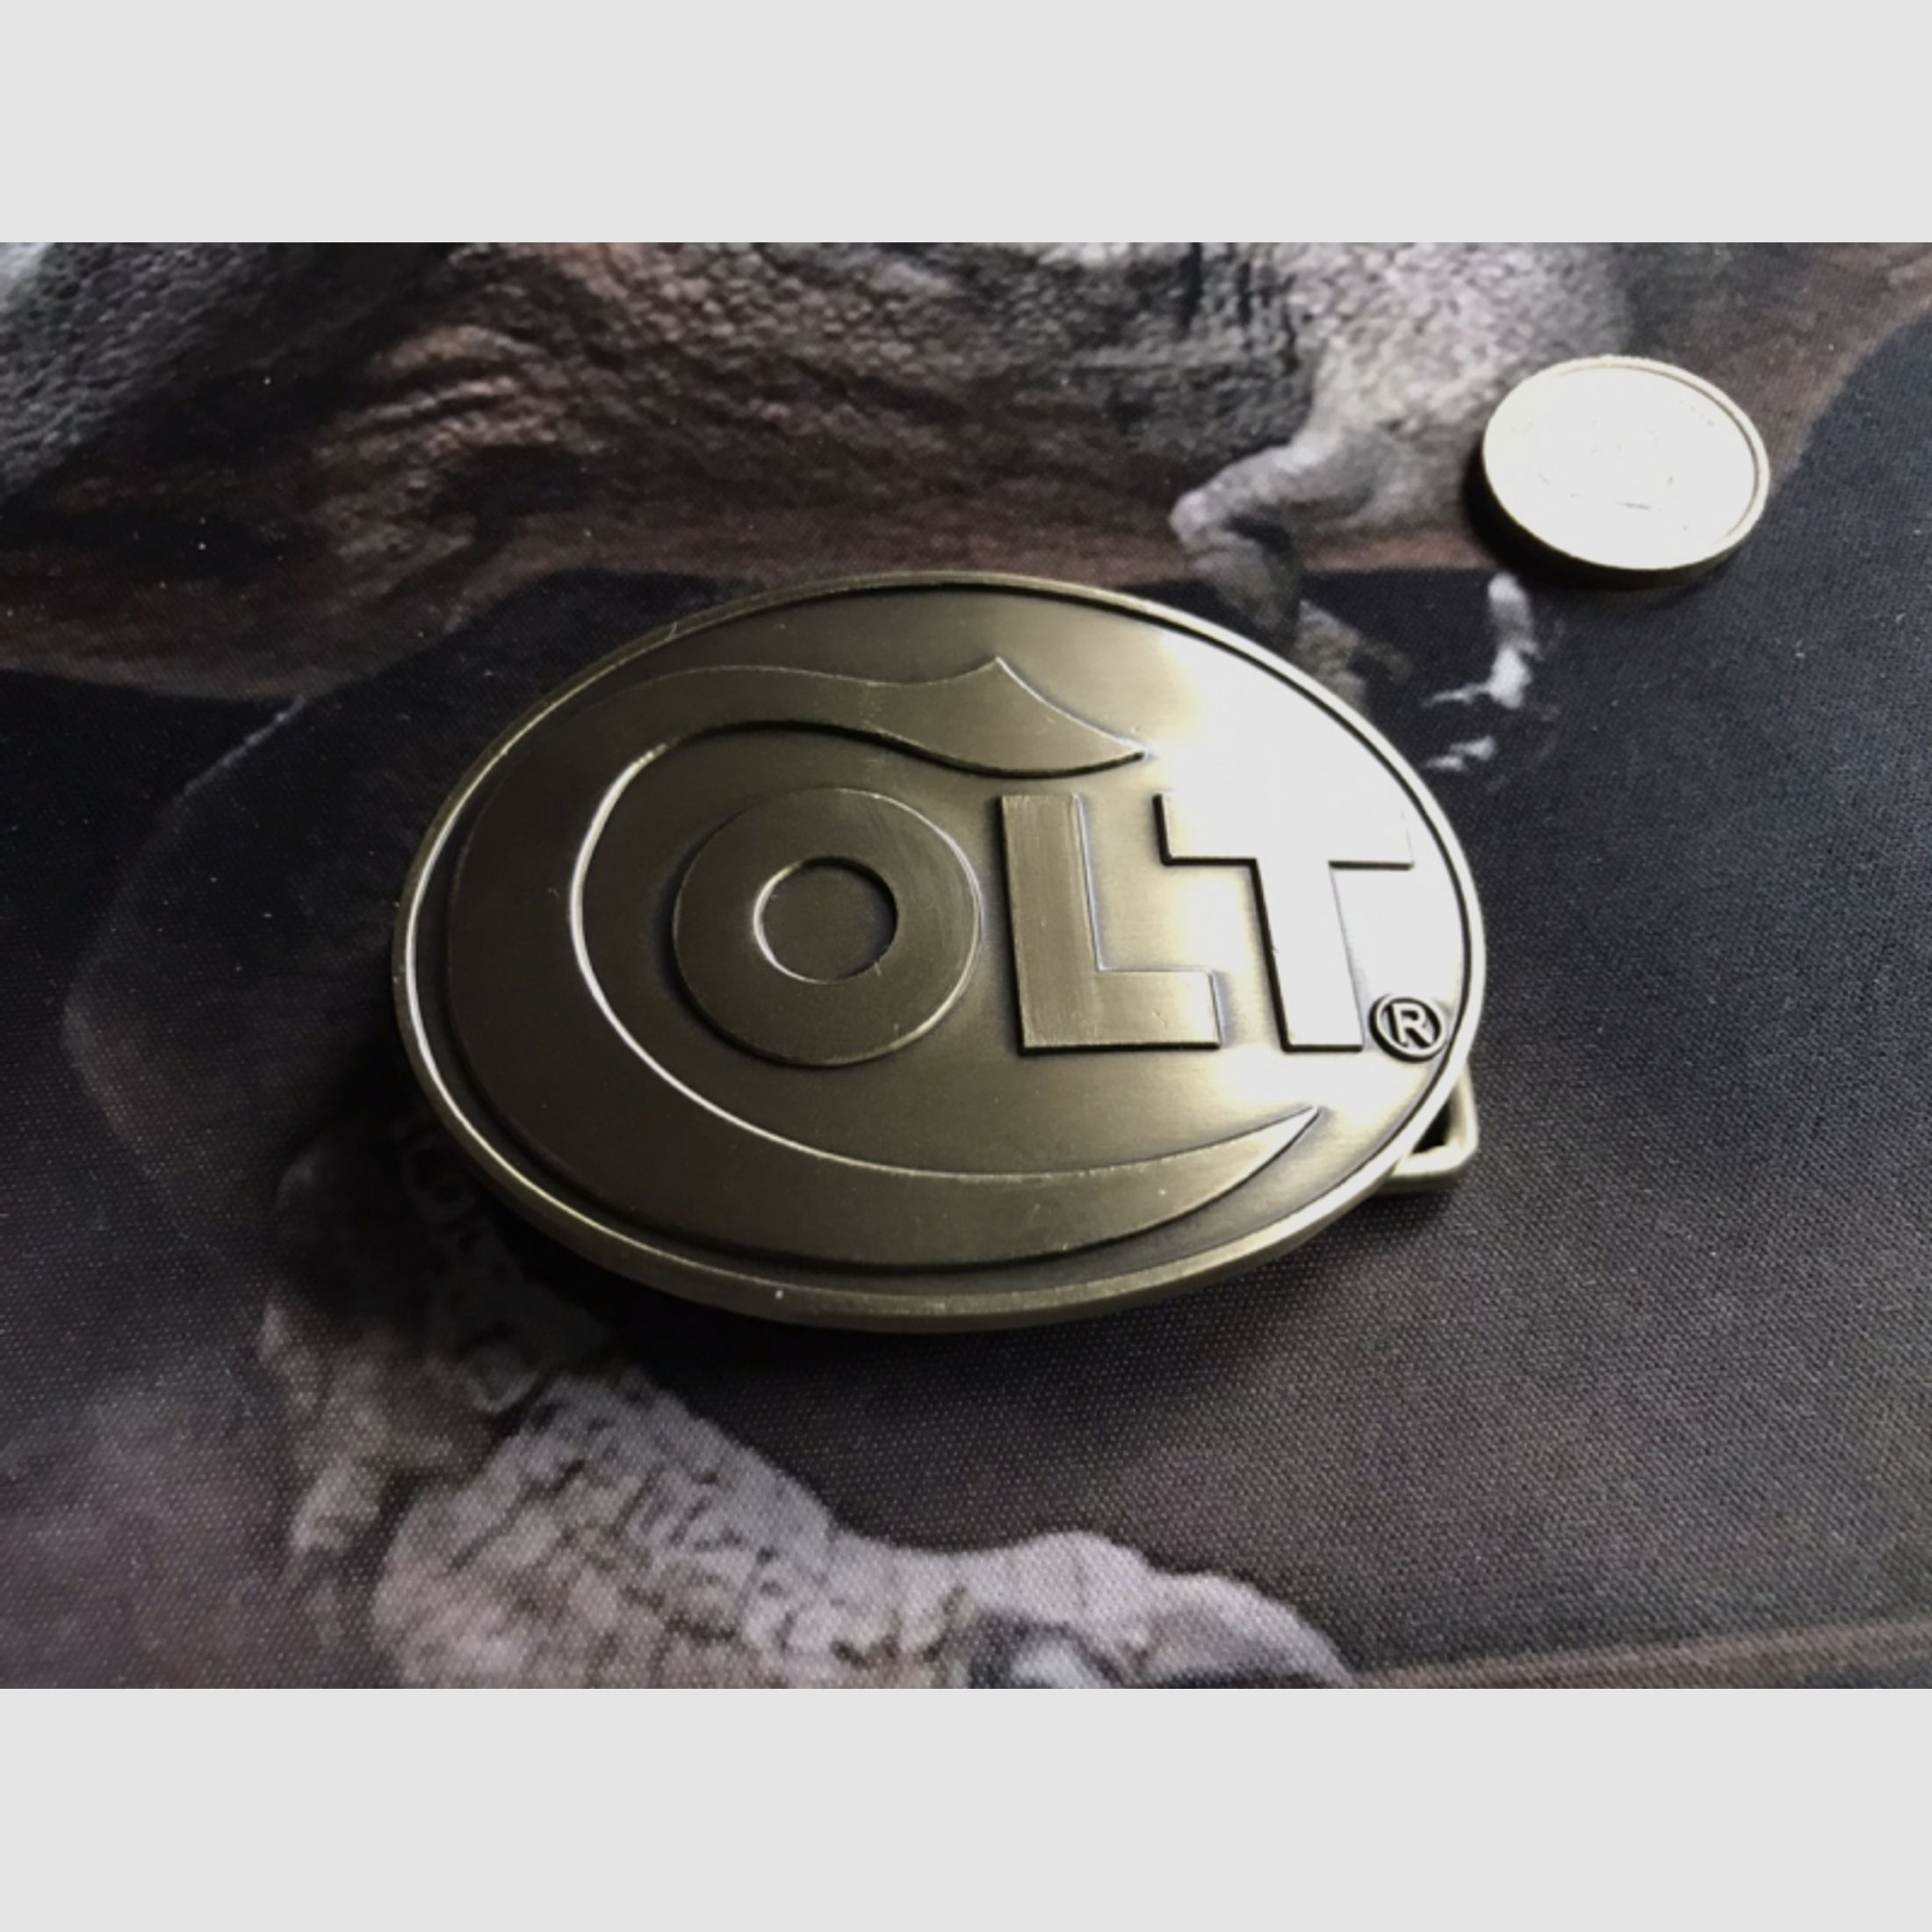 Gürtelschnalle, Belt Buckle, Colt, Logo, solid brass